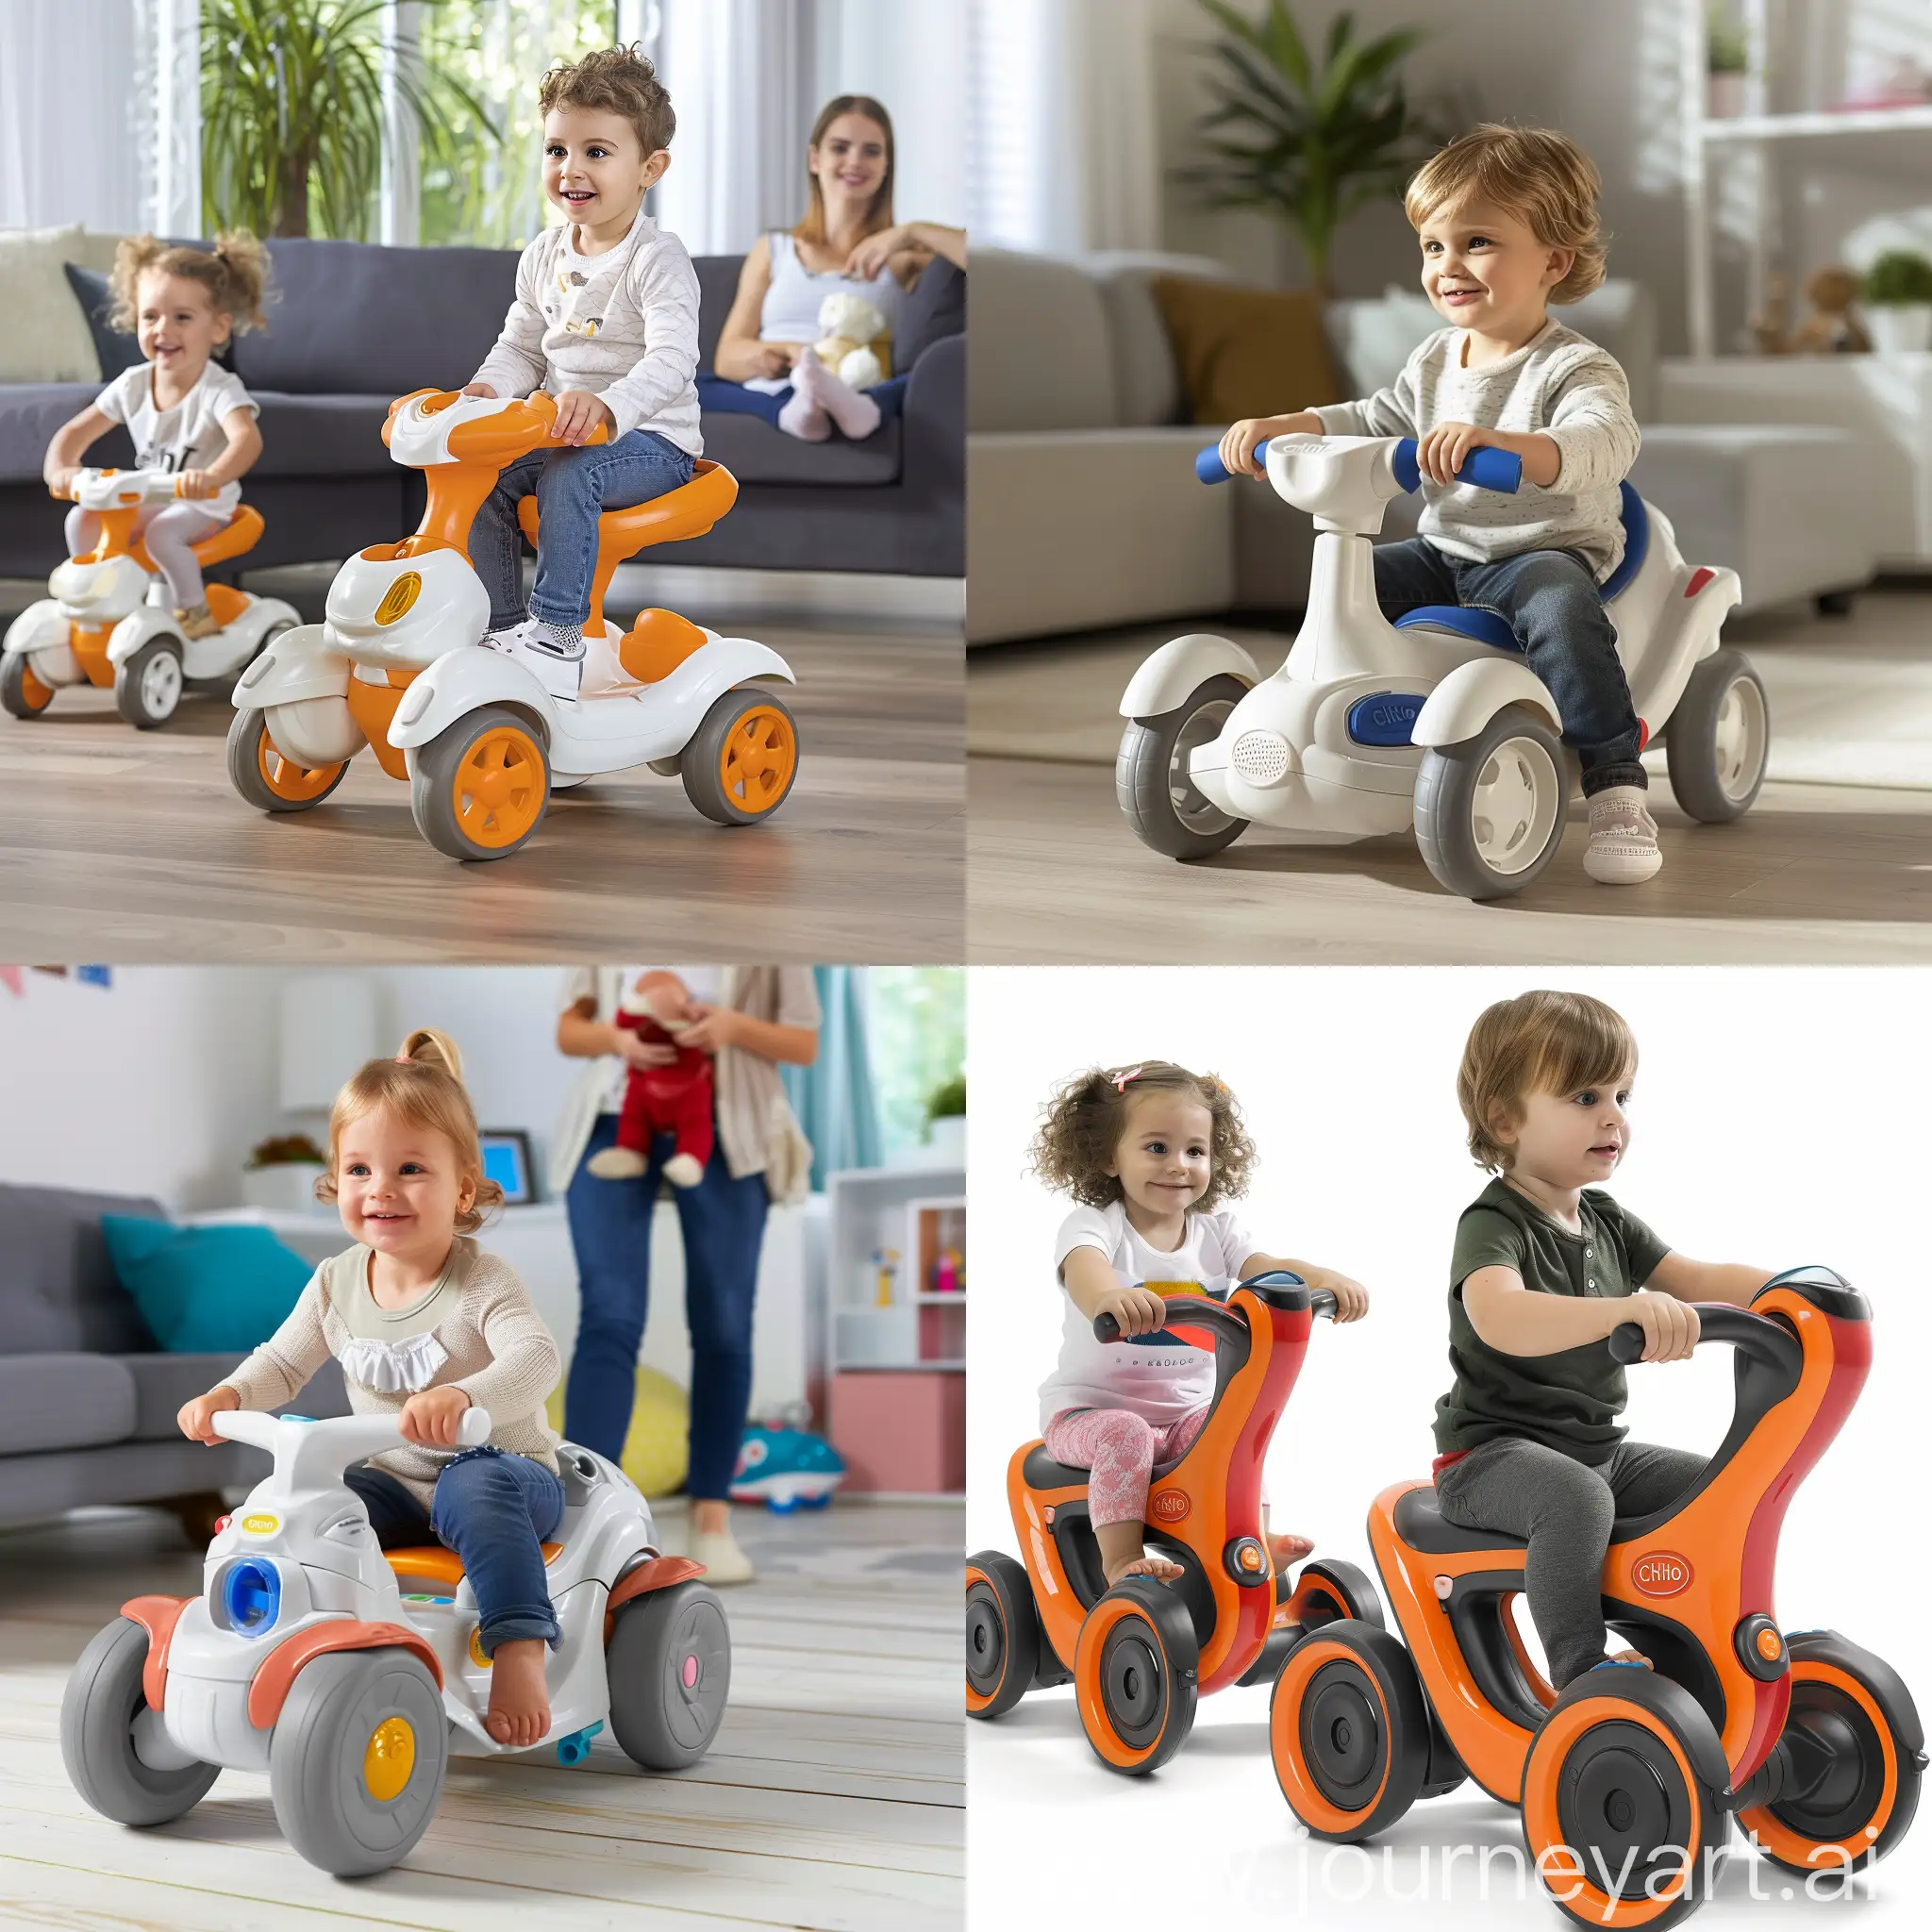 Chicco-RideOn-Motor-Skills-Evolution-for-Kids